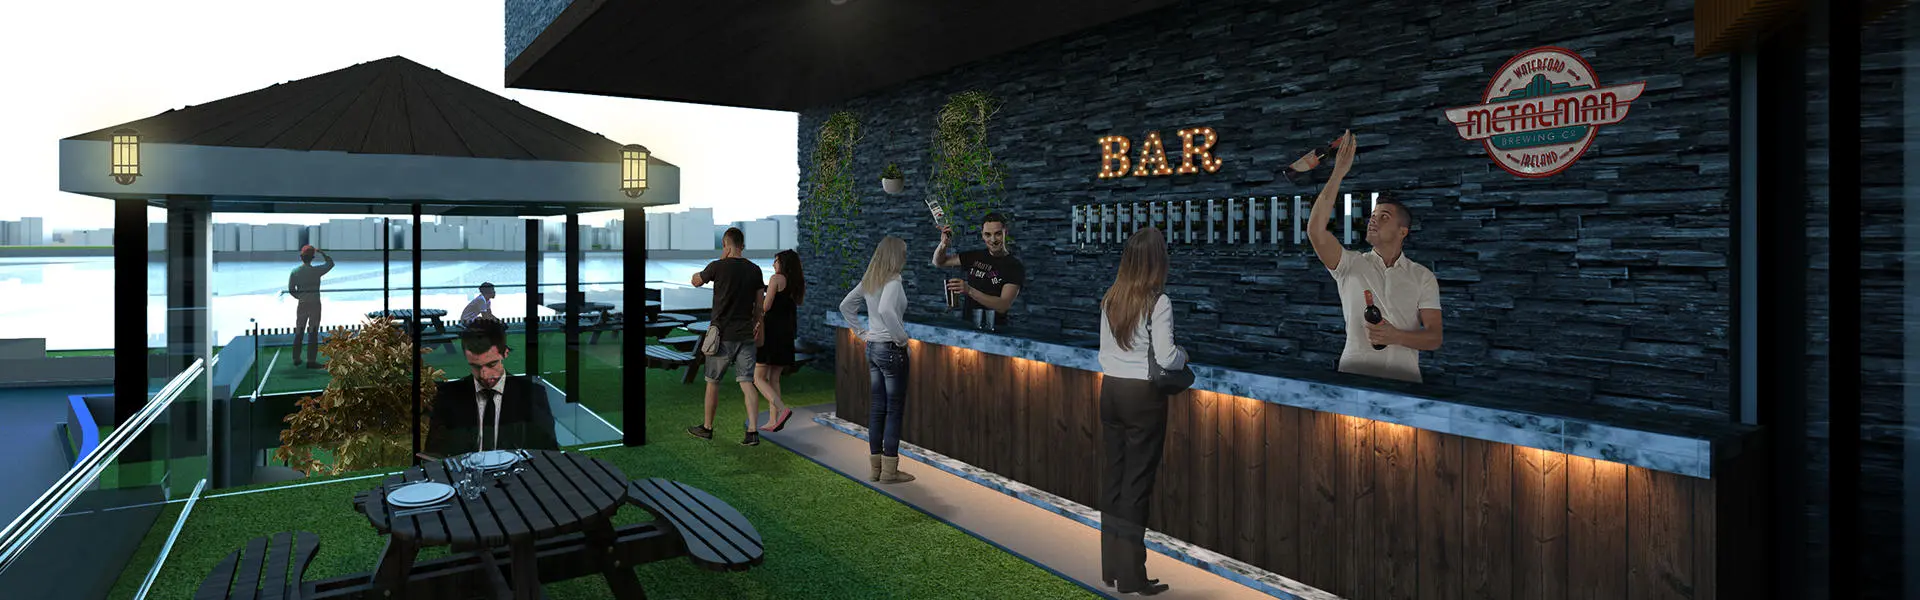 Picture shows Ed Kercher's architectural design of a bar area